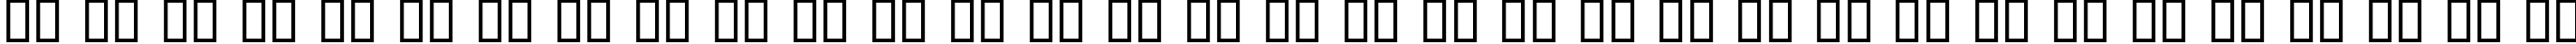 Пример написания русского алфавита шрифтом Inkburrow